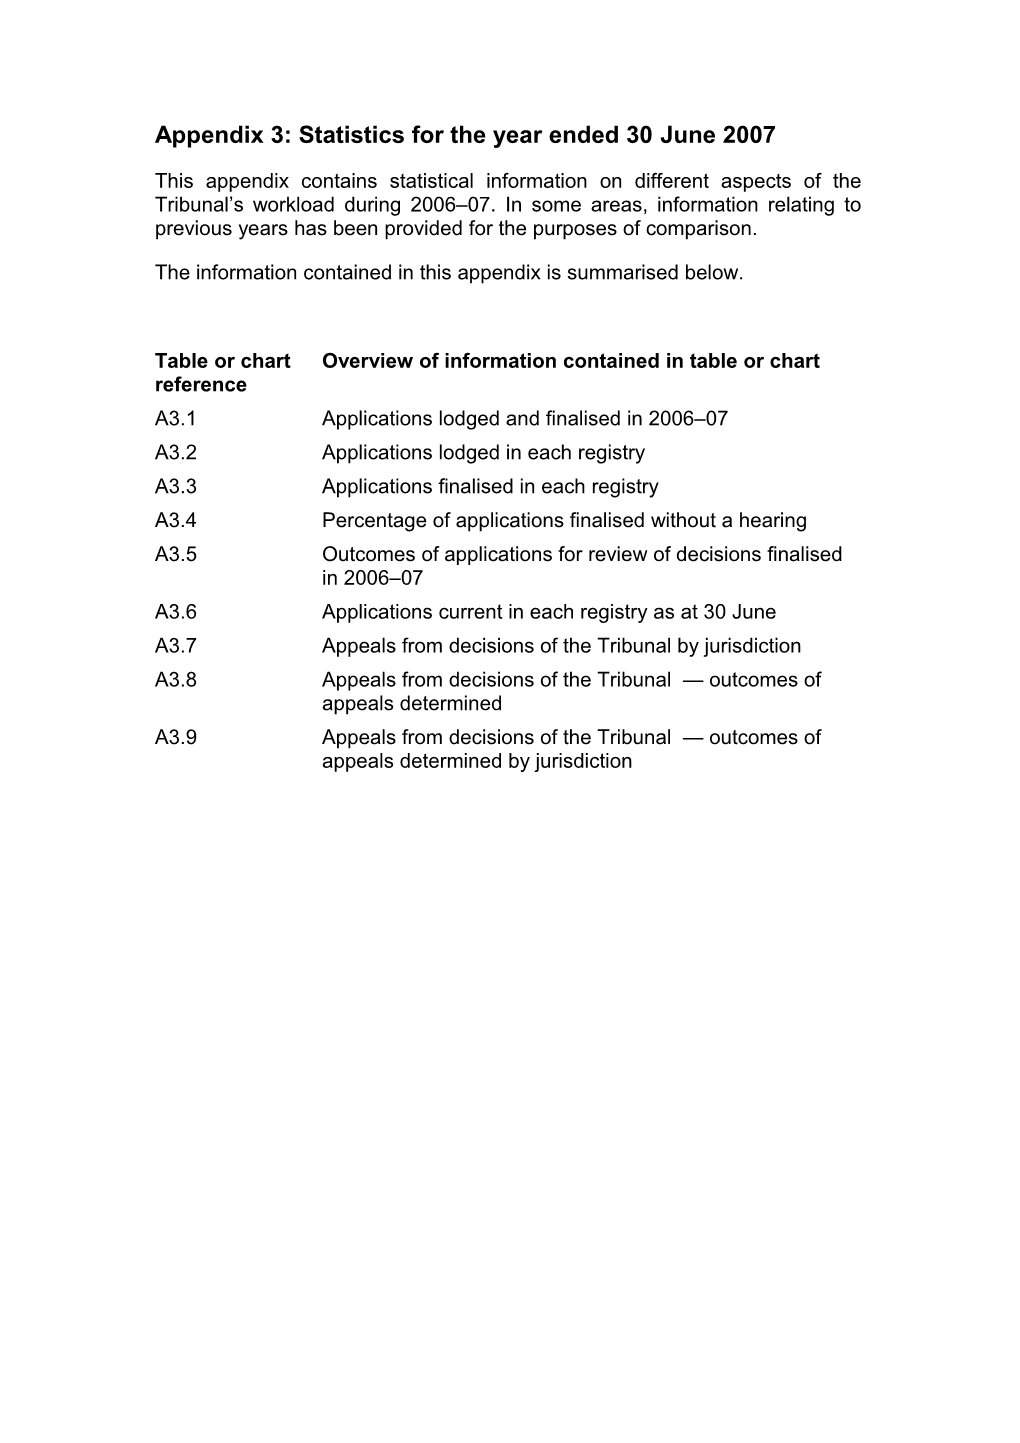 AAT Annual Report 2006-2007 Appendix 3 (Word Version)